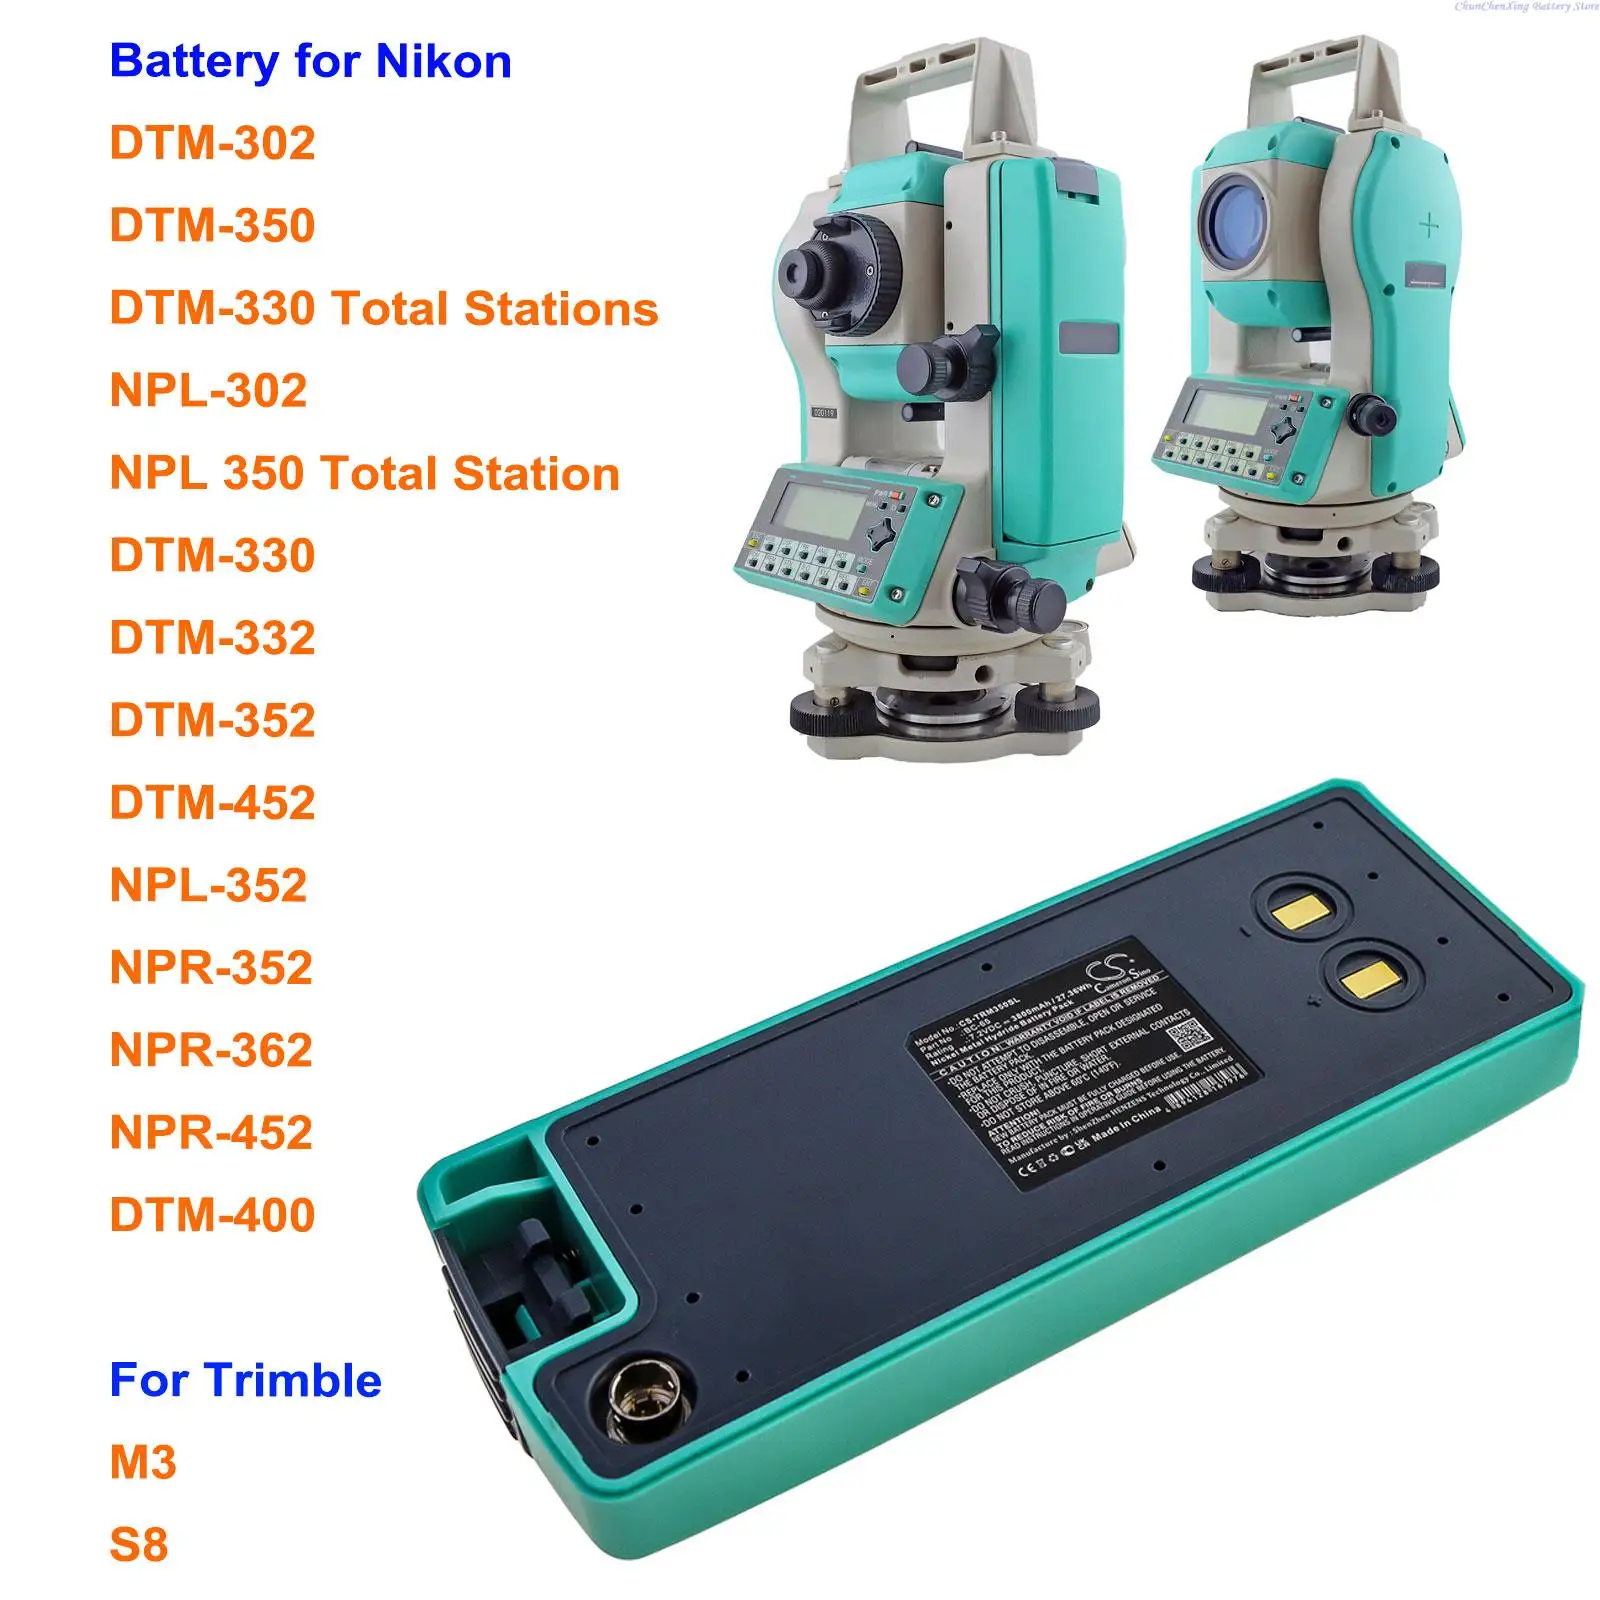 

Cameron Sino 3800mAh Battery for Nikon DTM-302,DTM-330,DTM-350,NPL-302,DTM-332,DTM-352,DTM-452,NPL-352,NPR-352,For Trimble M3,S8